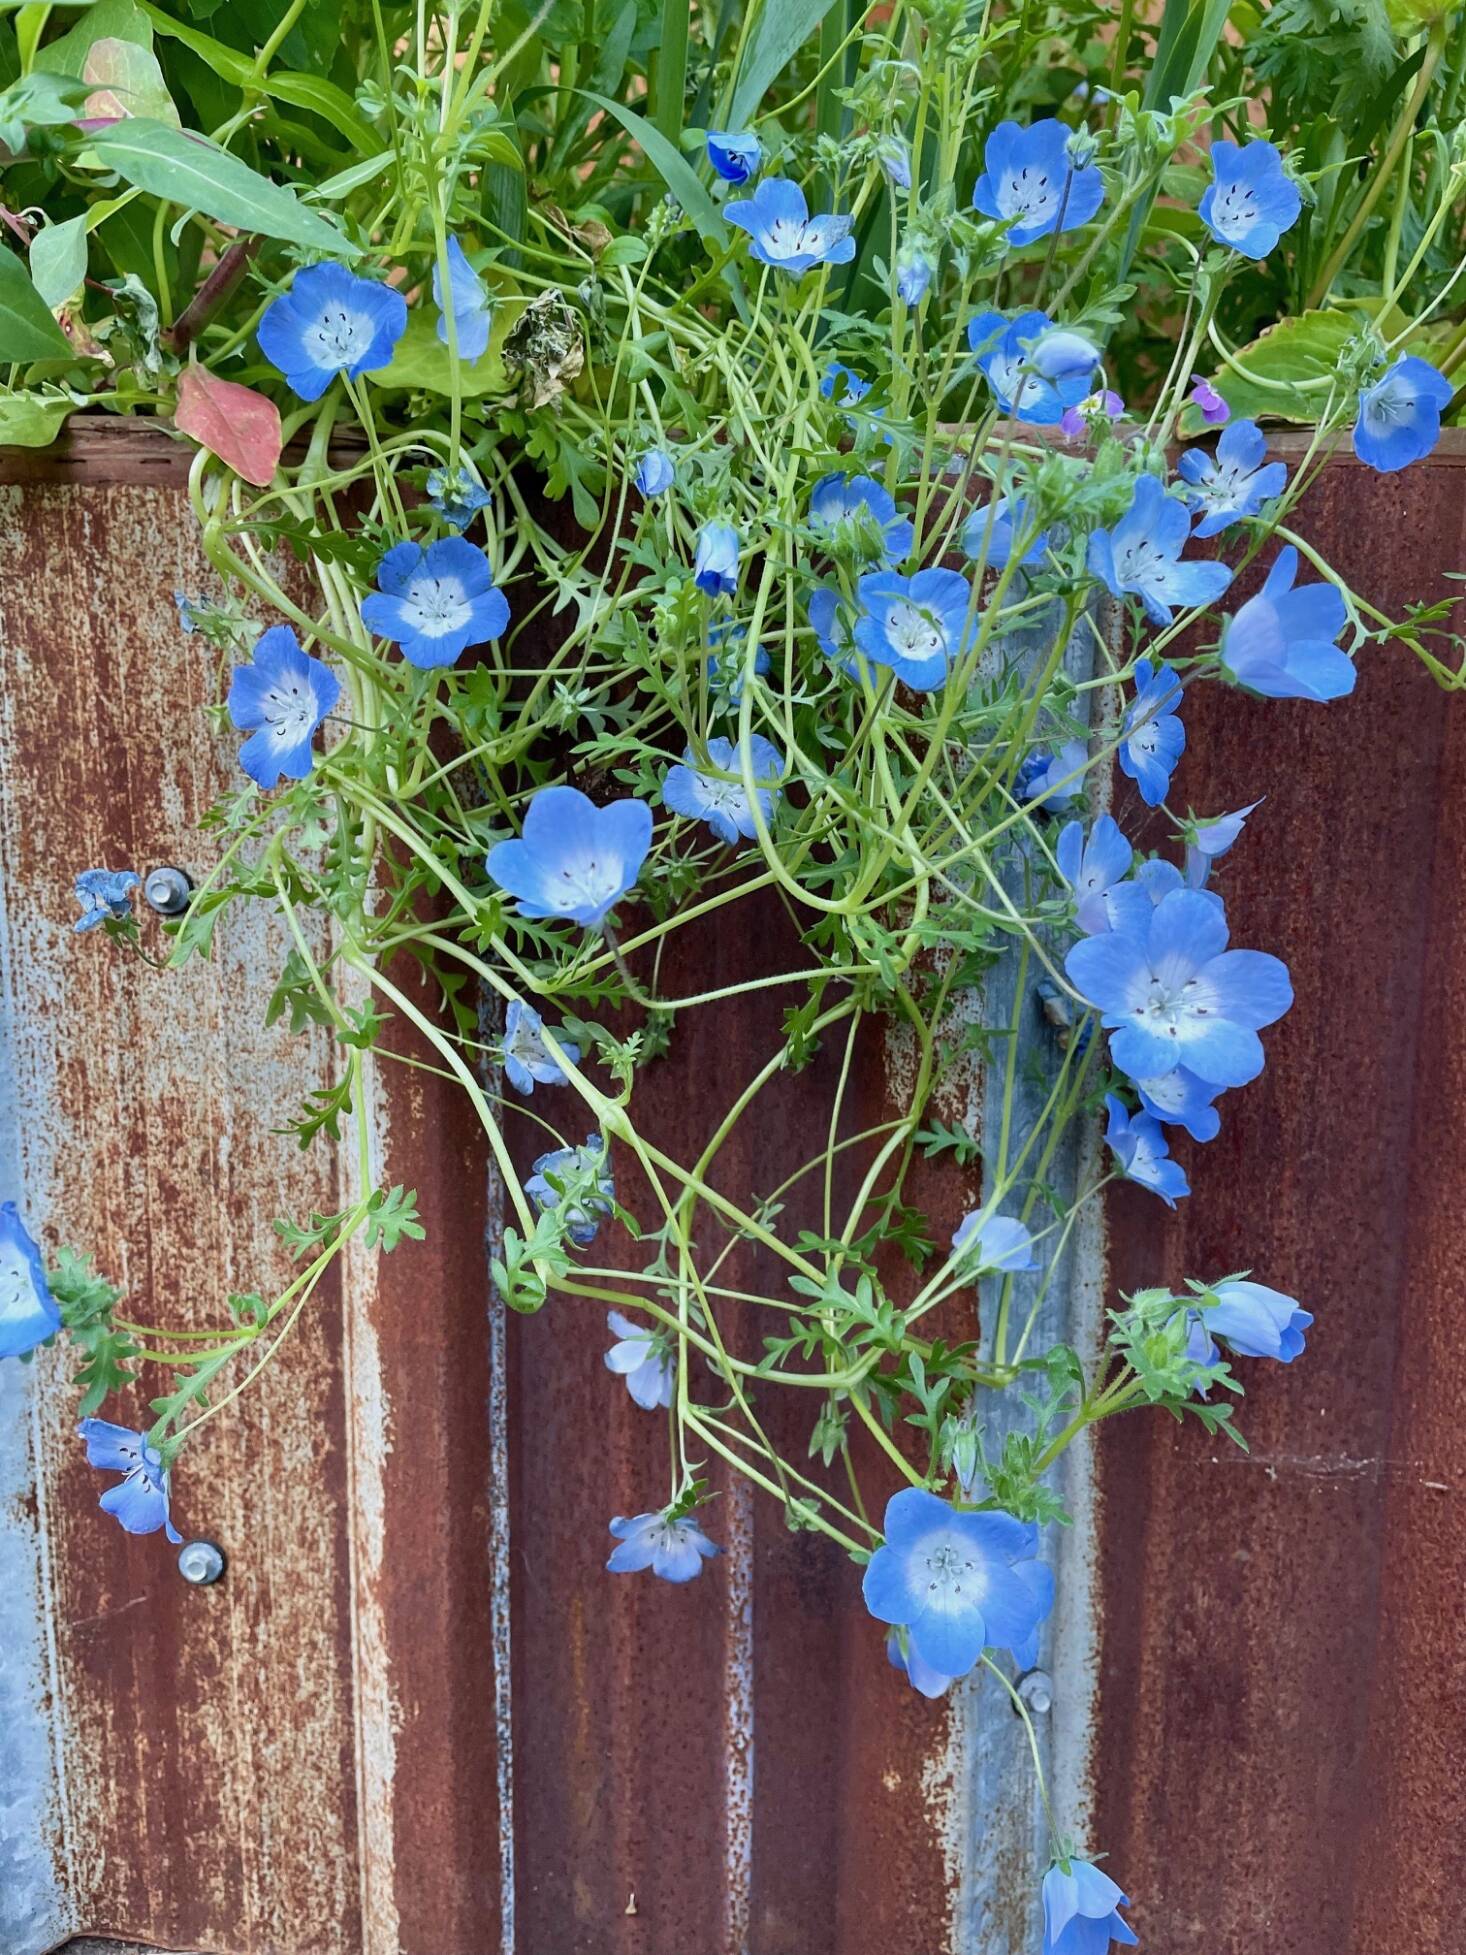 Best Blue Flowers to Grow in the Garden: My Favorite Blue Perennials ...